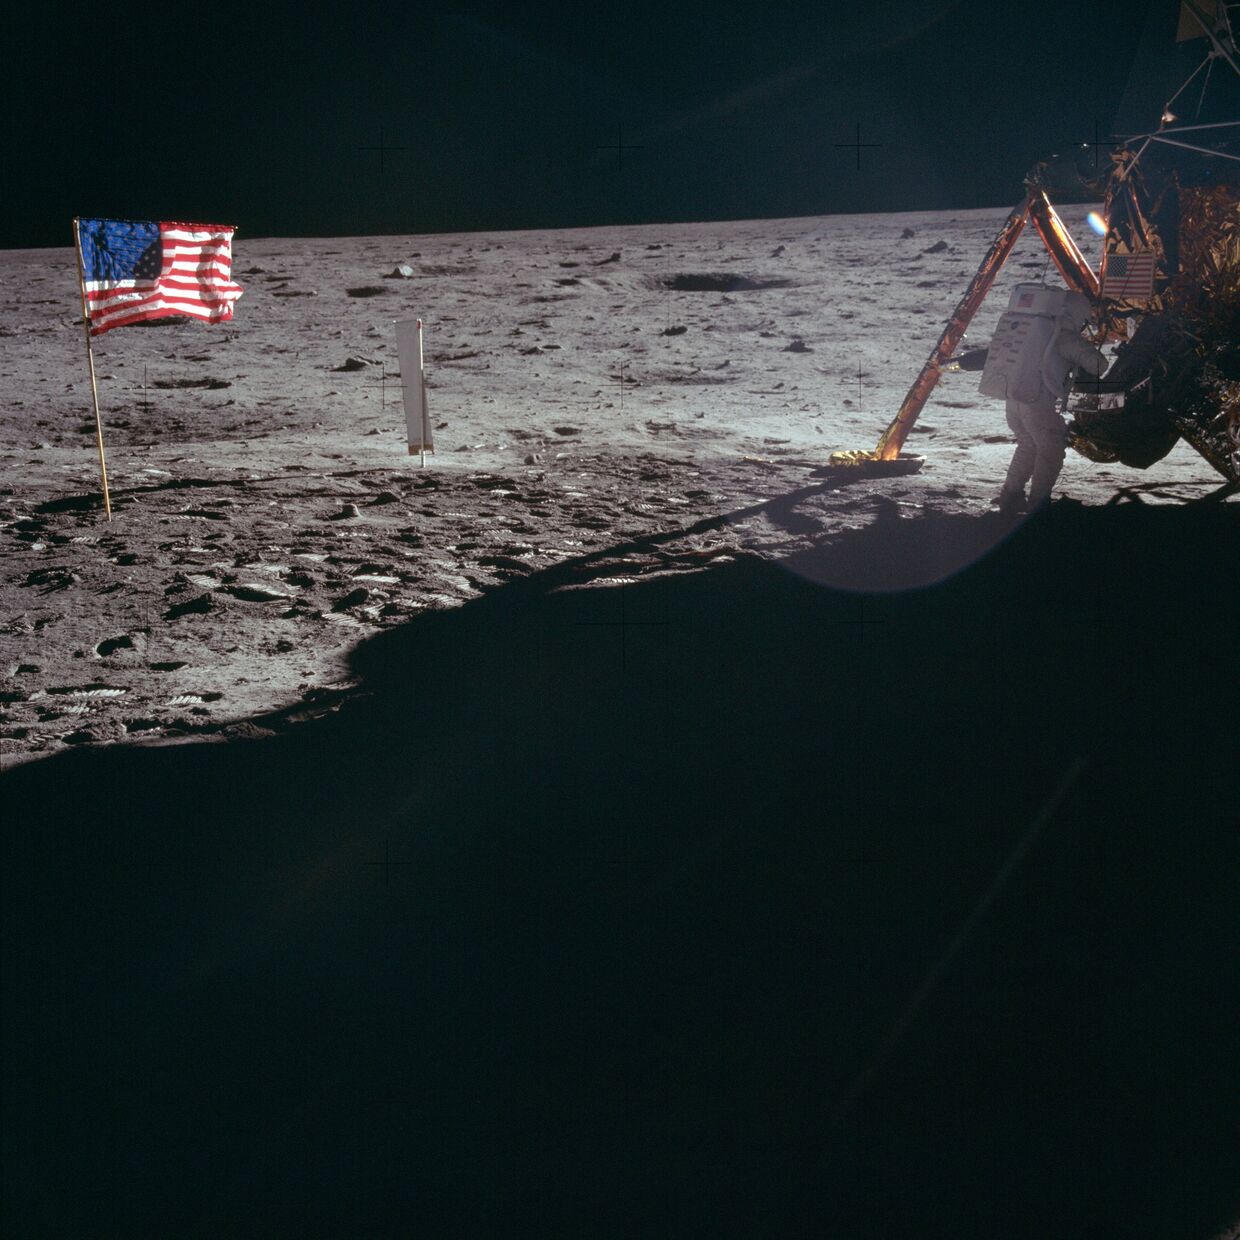 Астронавт Нил Армстронг на поверхности Луны